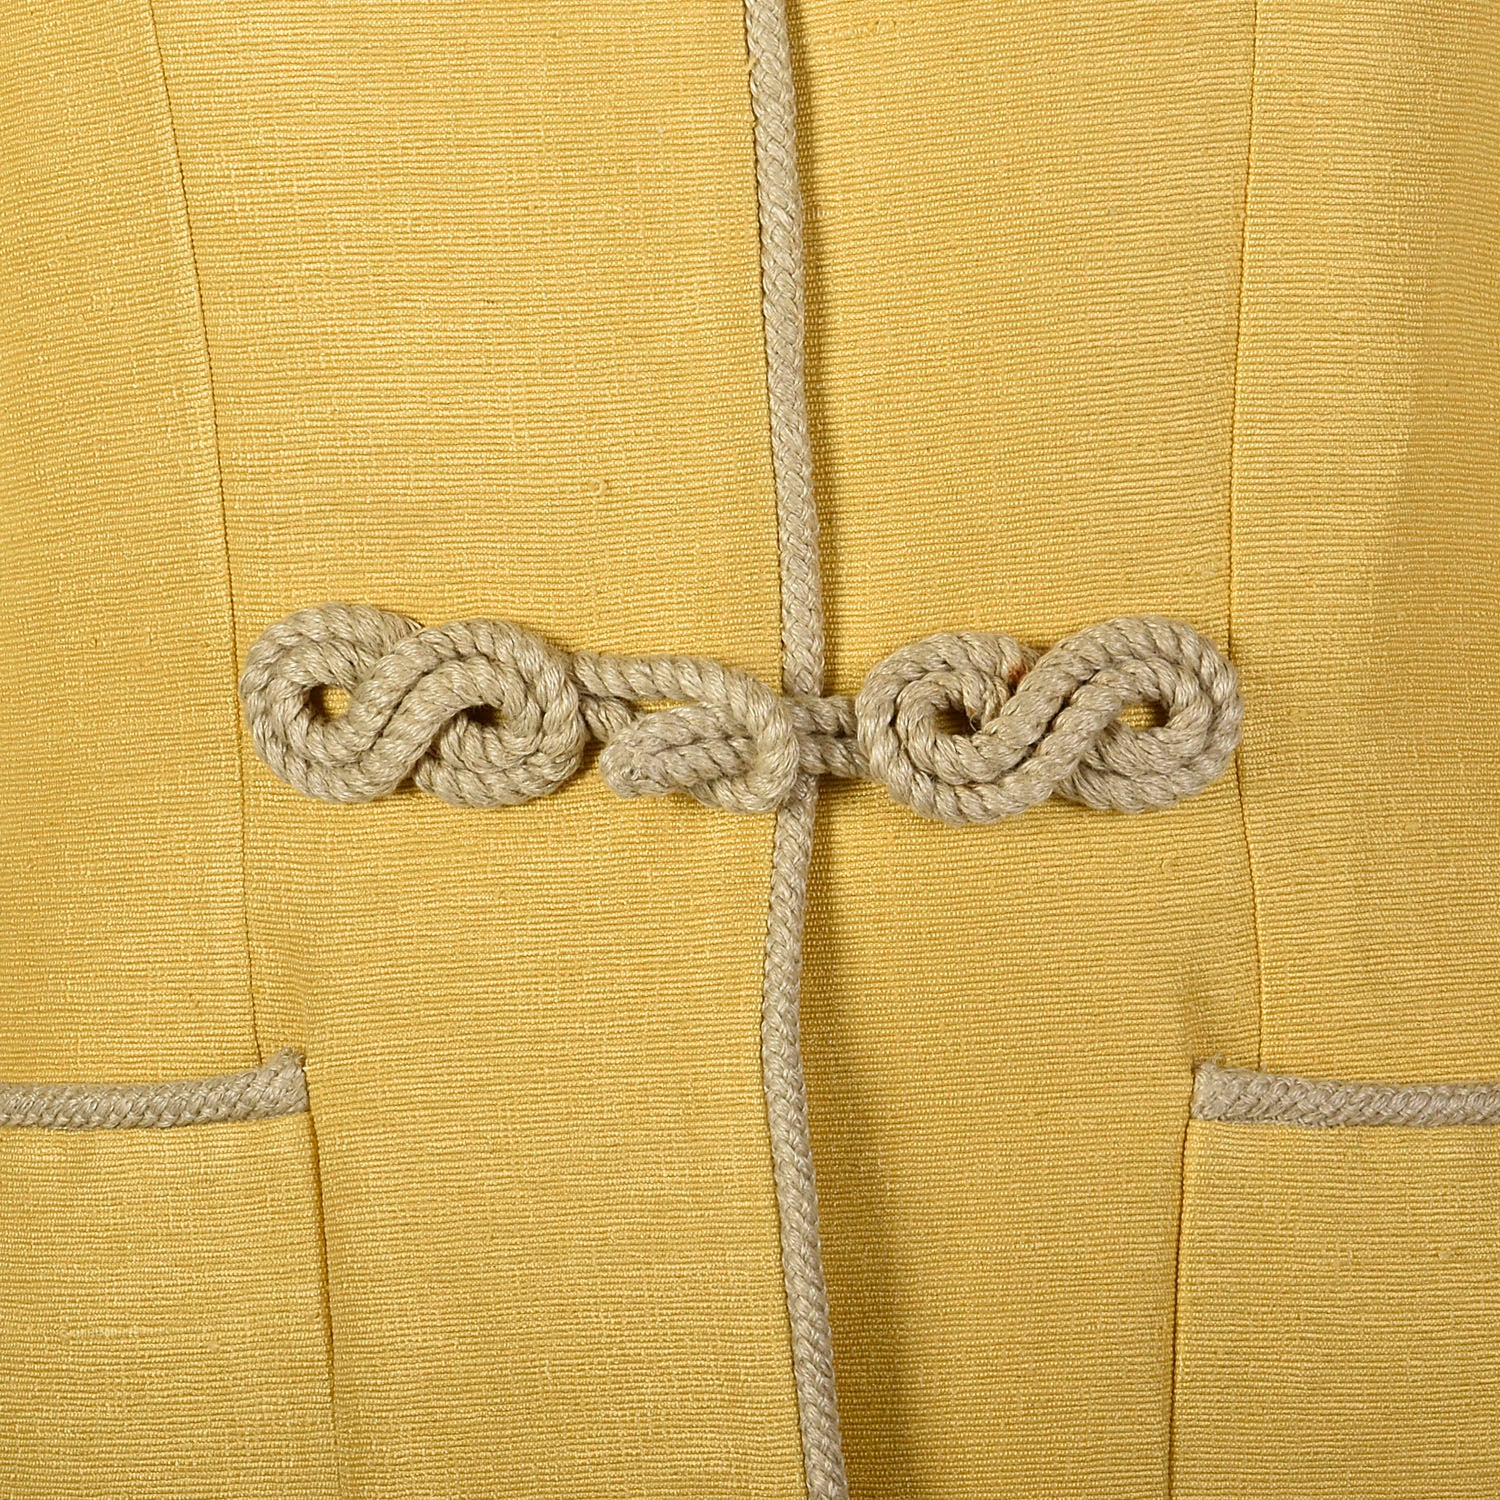 Medium 1980s Yves Saint Laurent Yellow YSL Long Clutch Coat